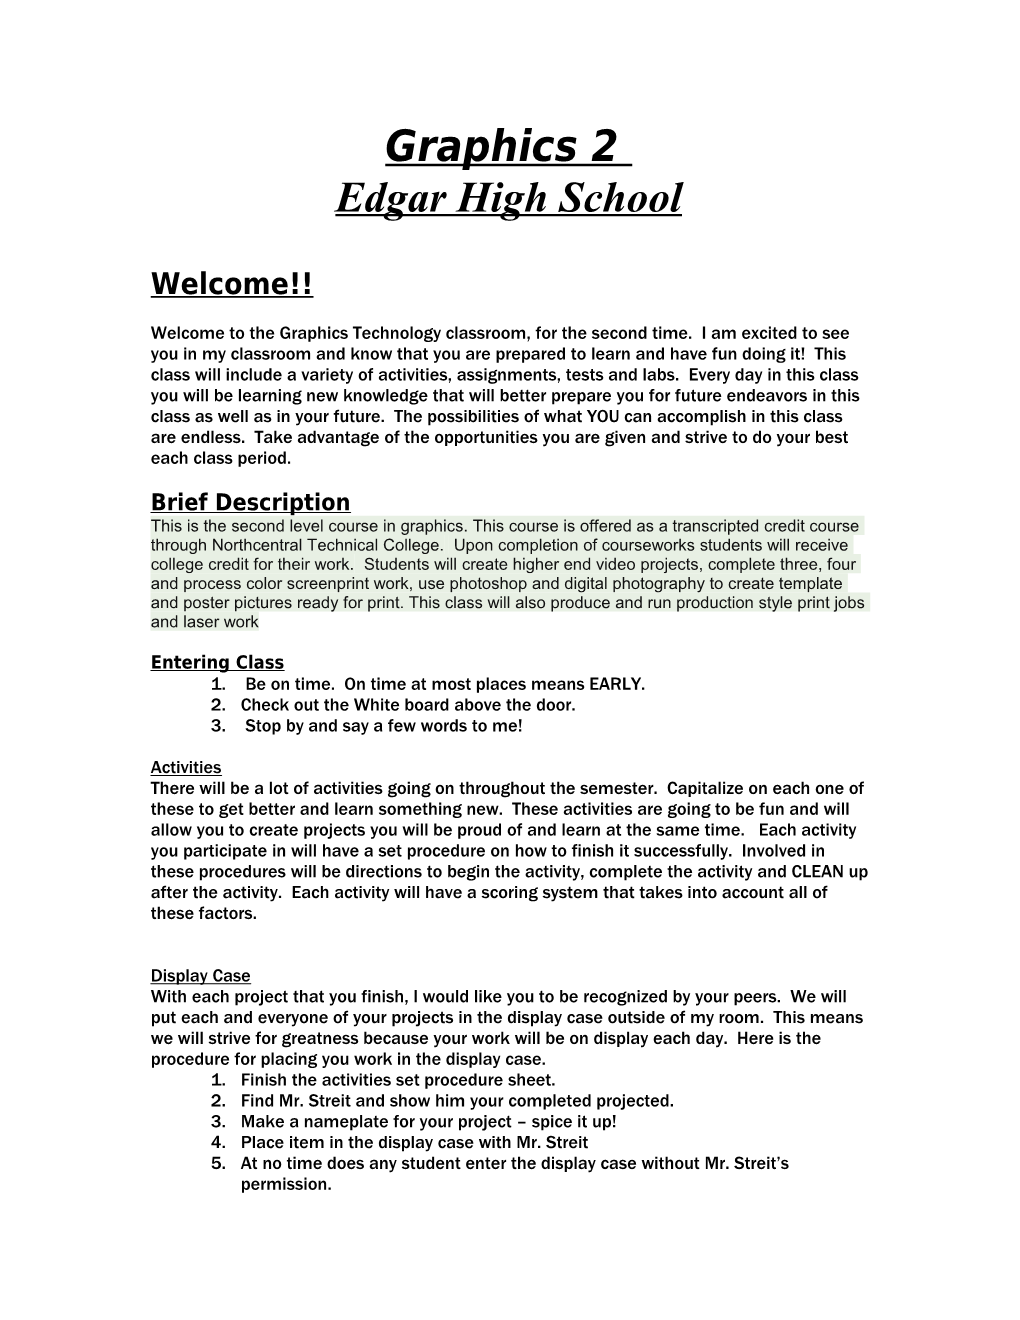 Edgar High School